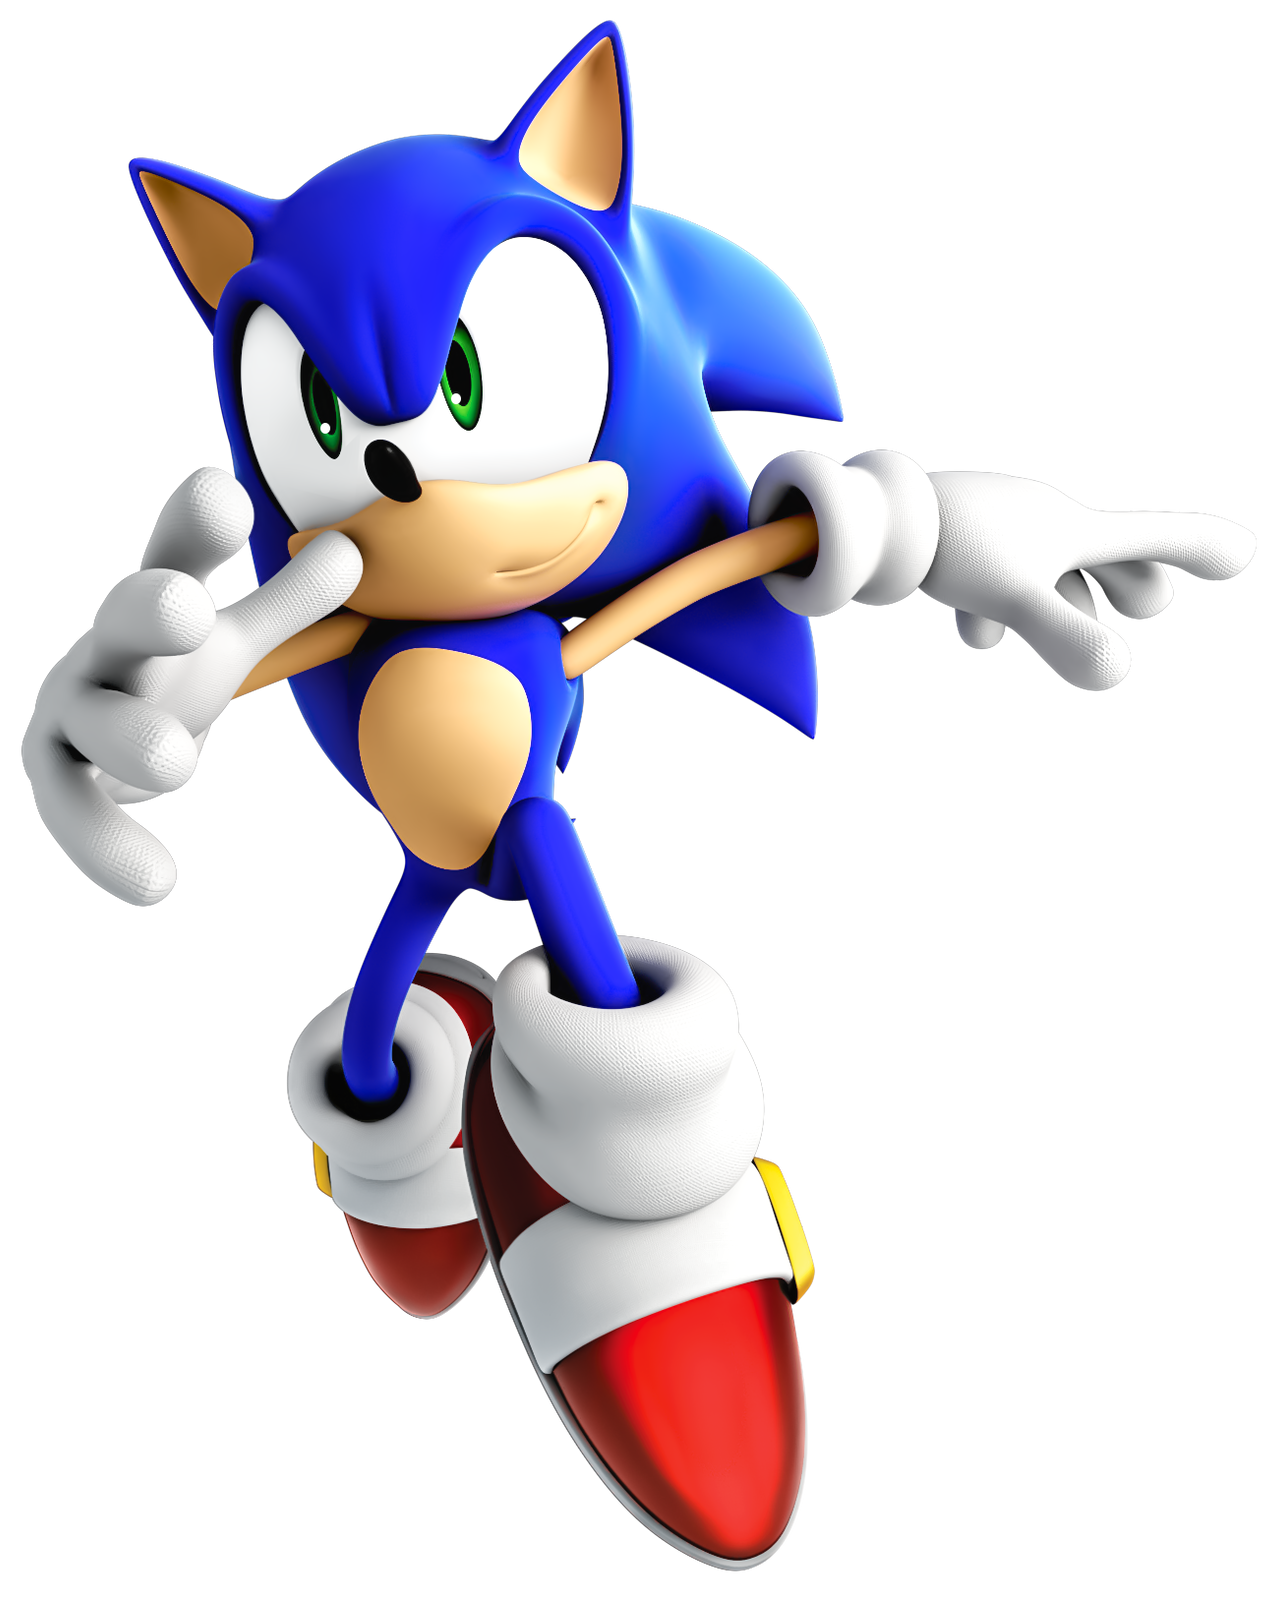 Sonic The Hedgehog - 3ds Max Vray by KolnzBerserK on DeviantArt